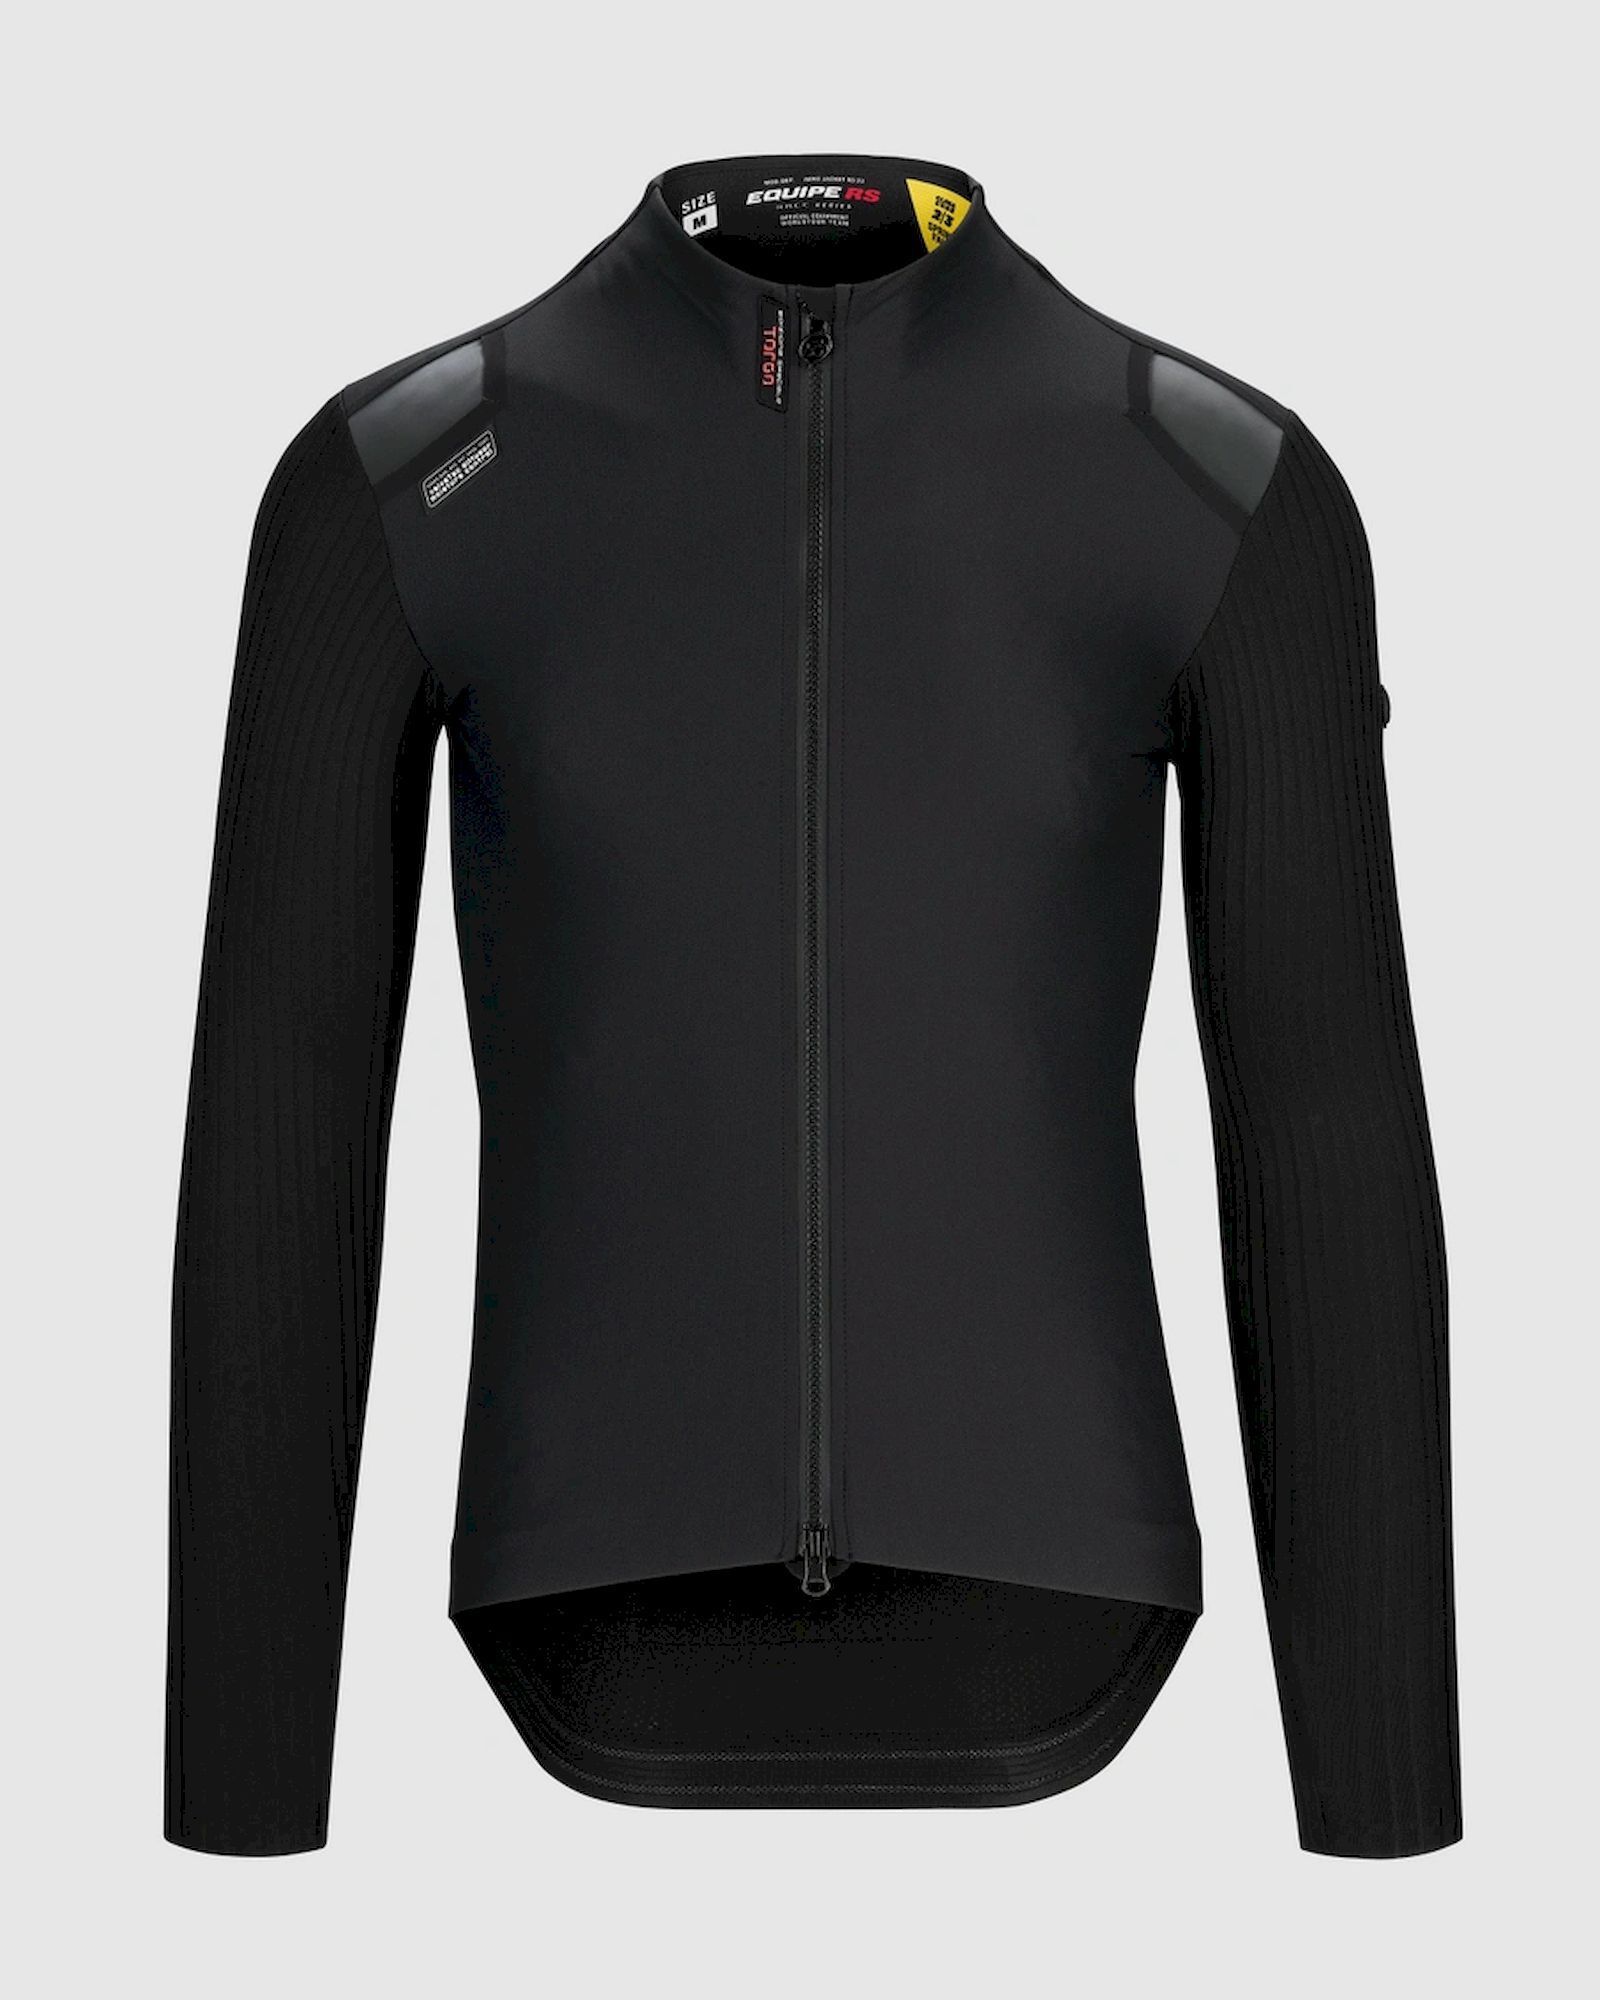 Assos Equipe RS 2/3 Jacket Targa - Cycling jacket - Men's | Hardloop